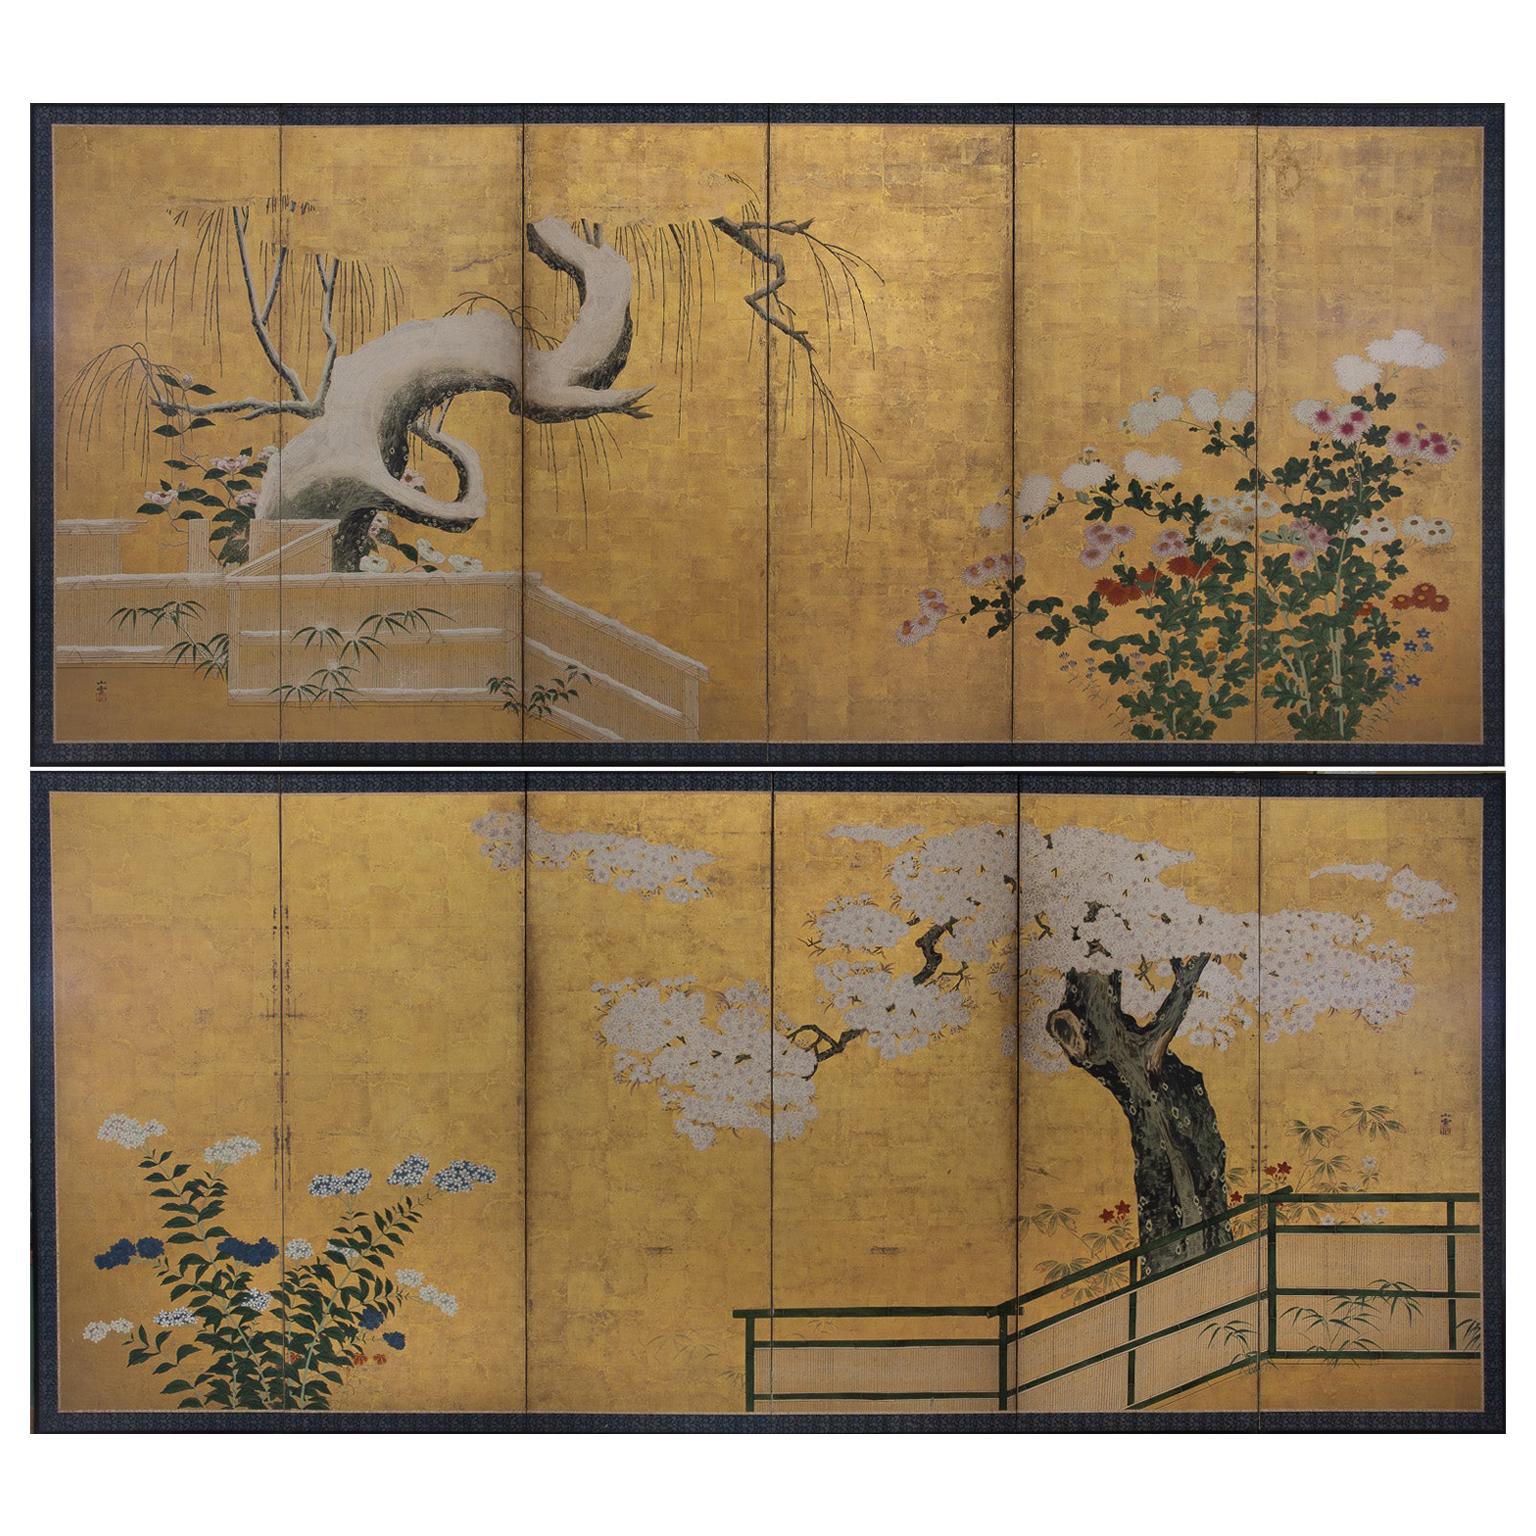 Pair of Six-Fold Japanese Screens Attribtuted to Kano Sansetsu, 1590-1651